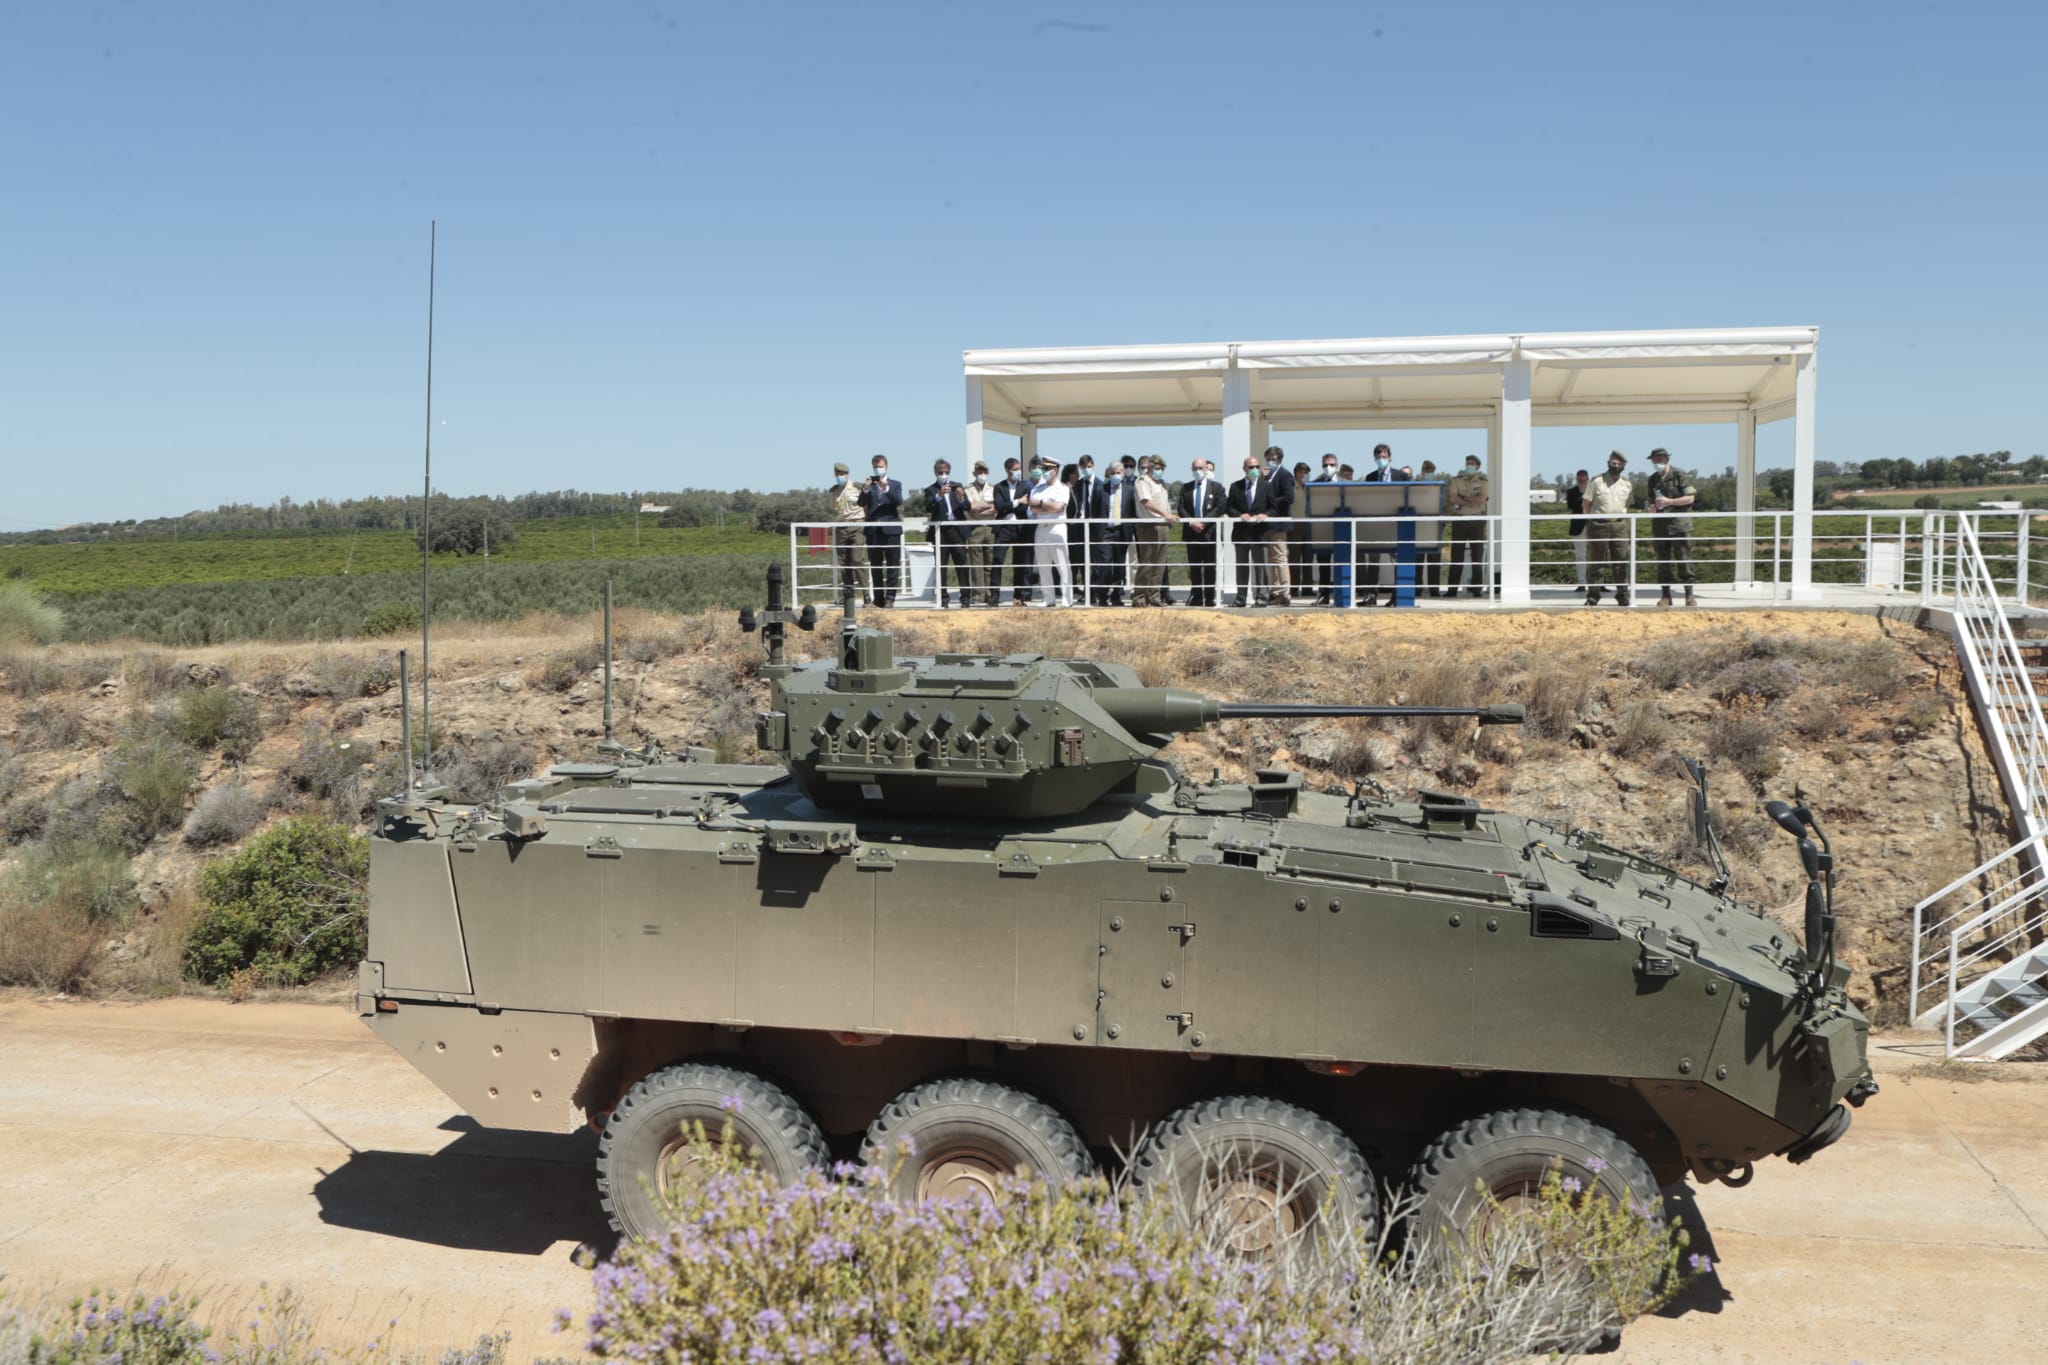 Spanish Army VCR 8x8 Wheeled Combat Vehicles Demonstrator Program